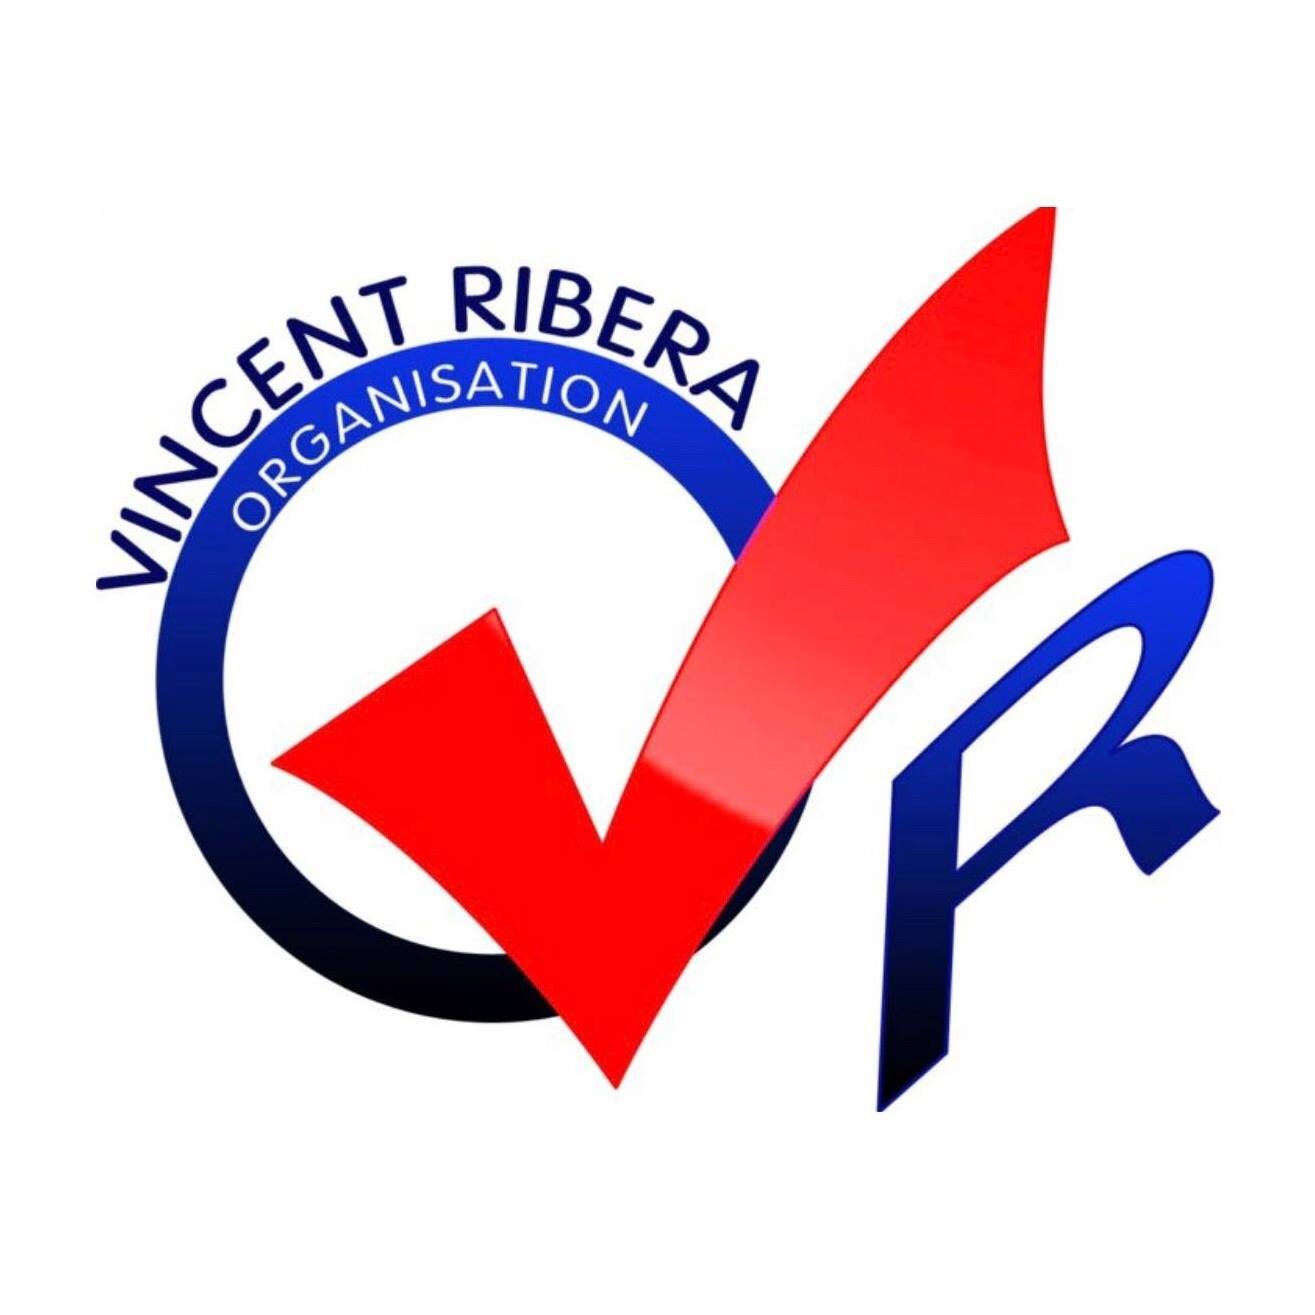 Vincent Ribera Organisation